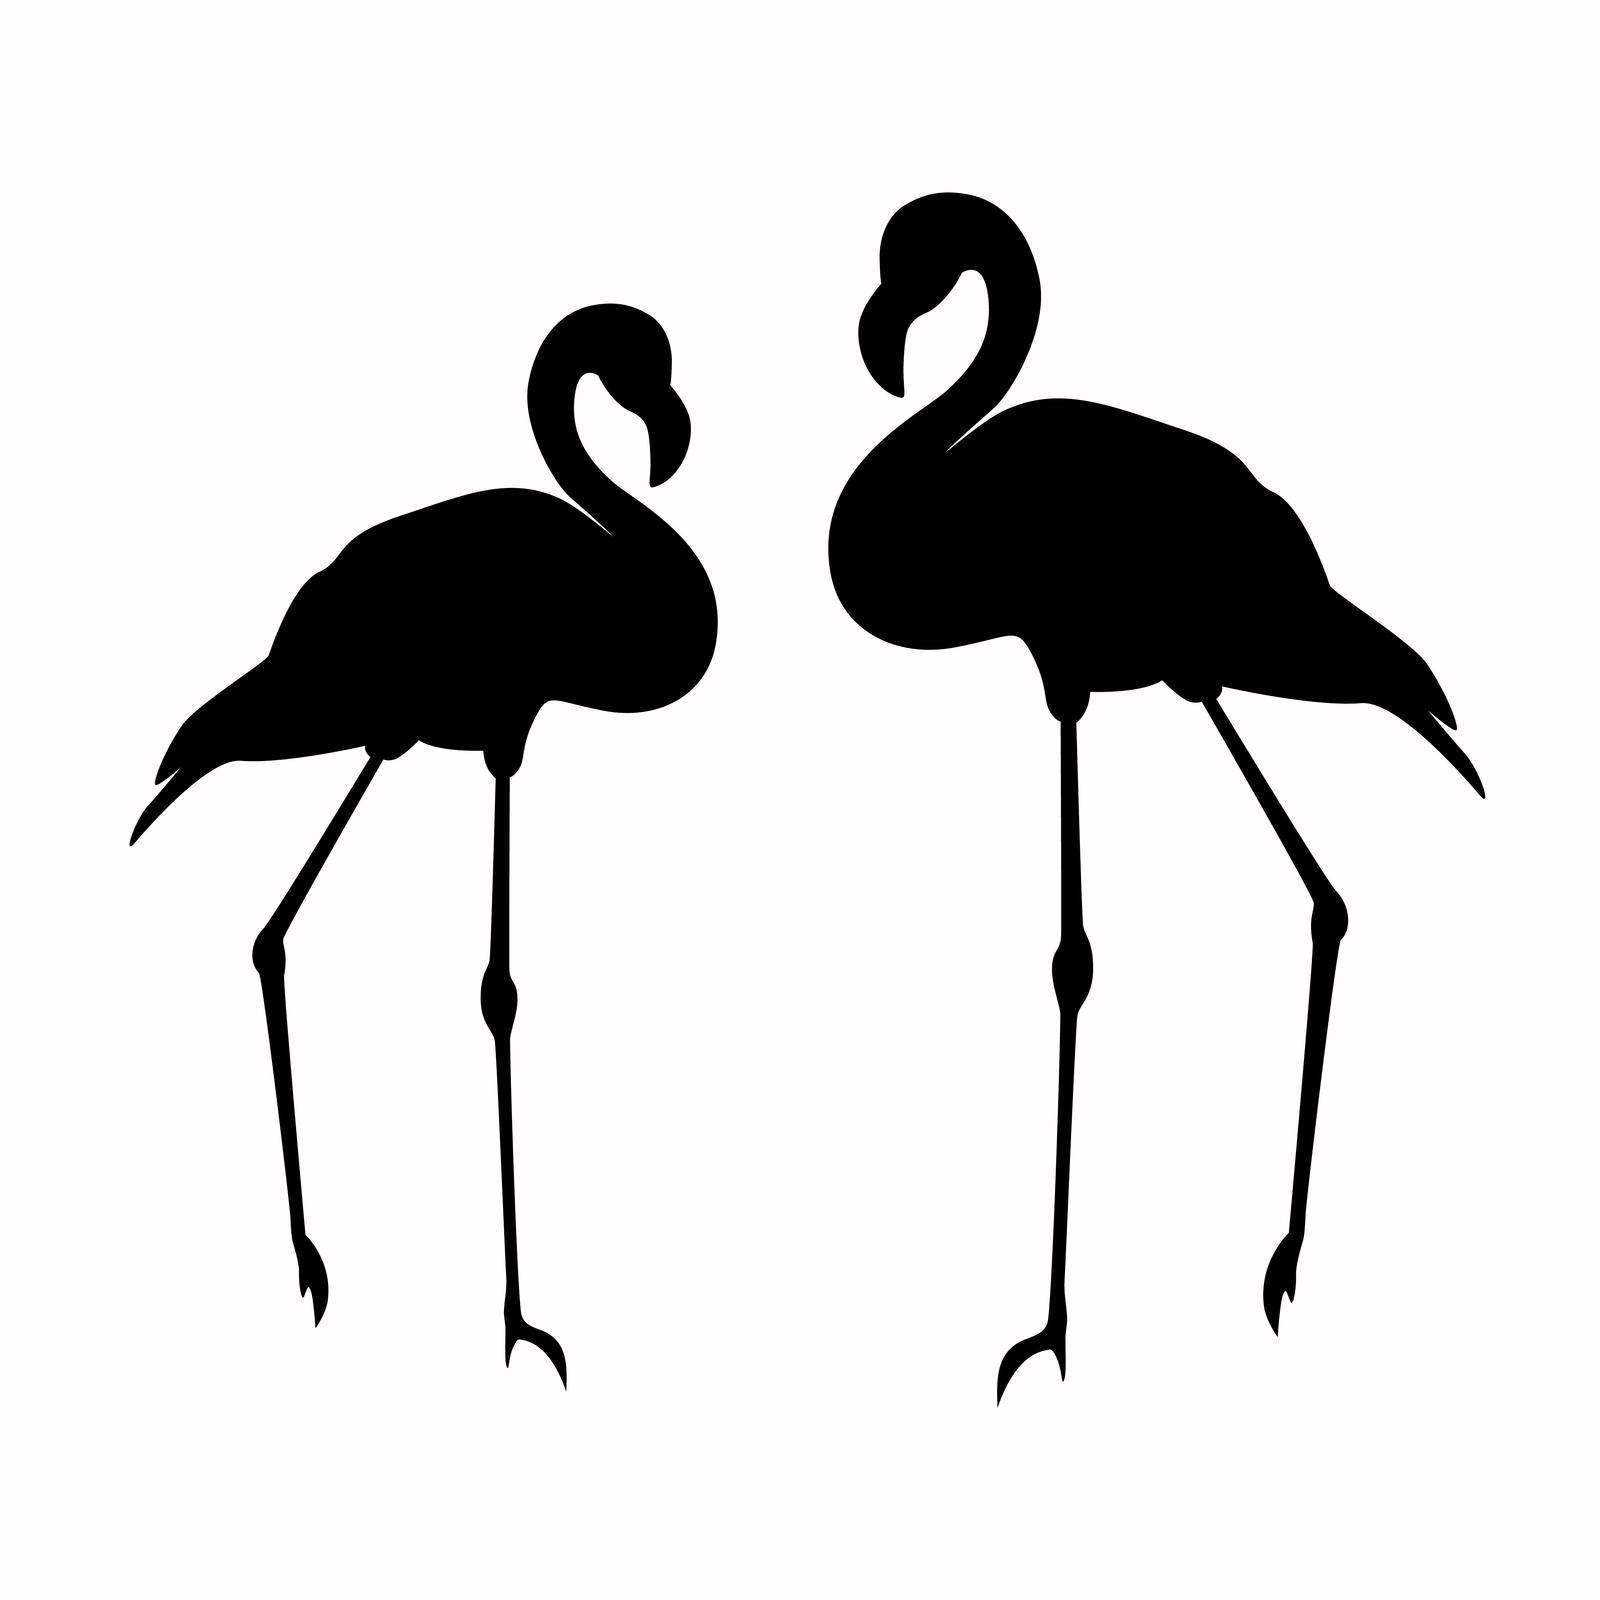 Pair flamingos black silhouette isolated on white background by TassiaK